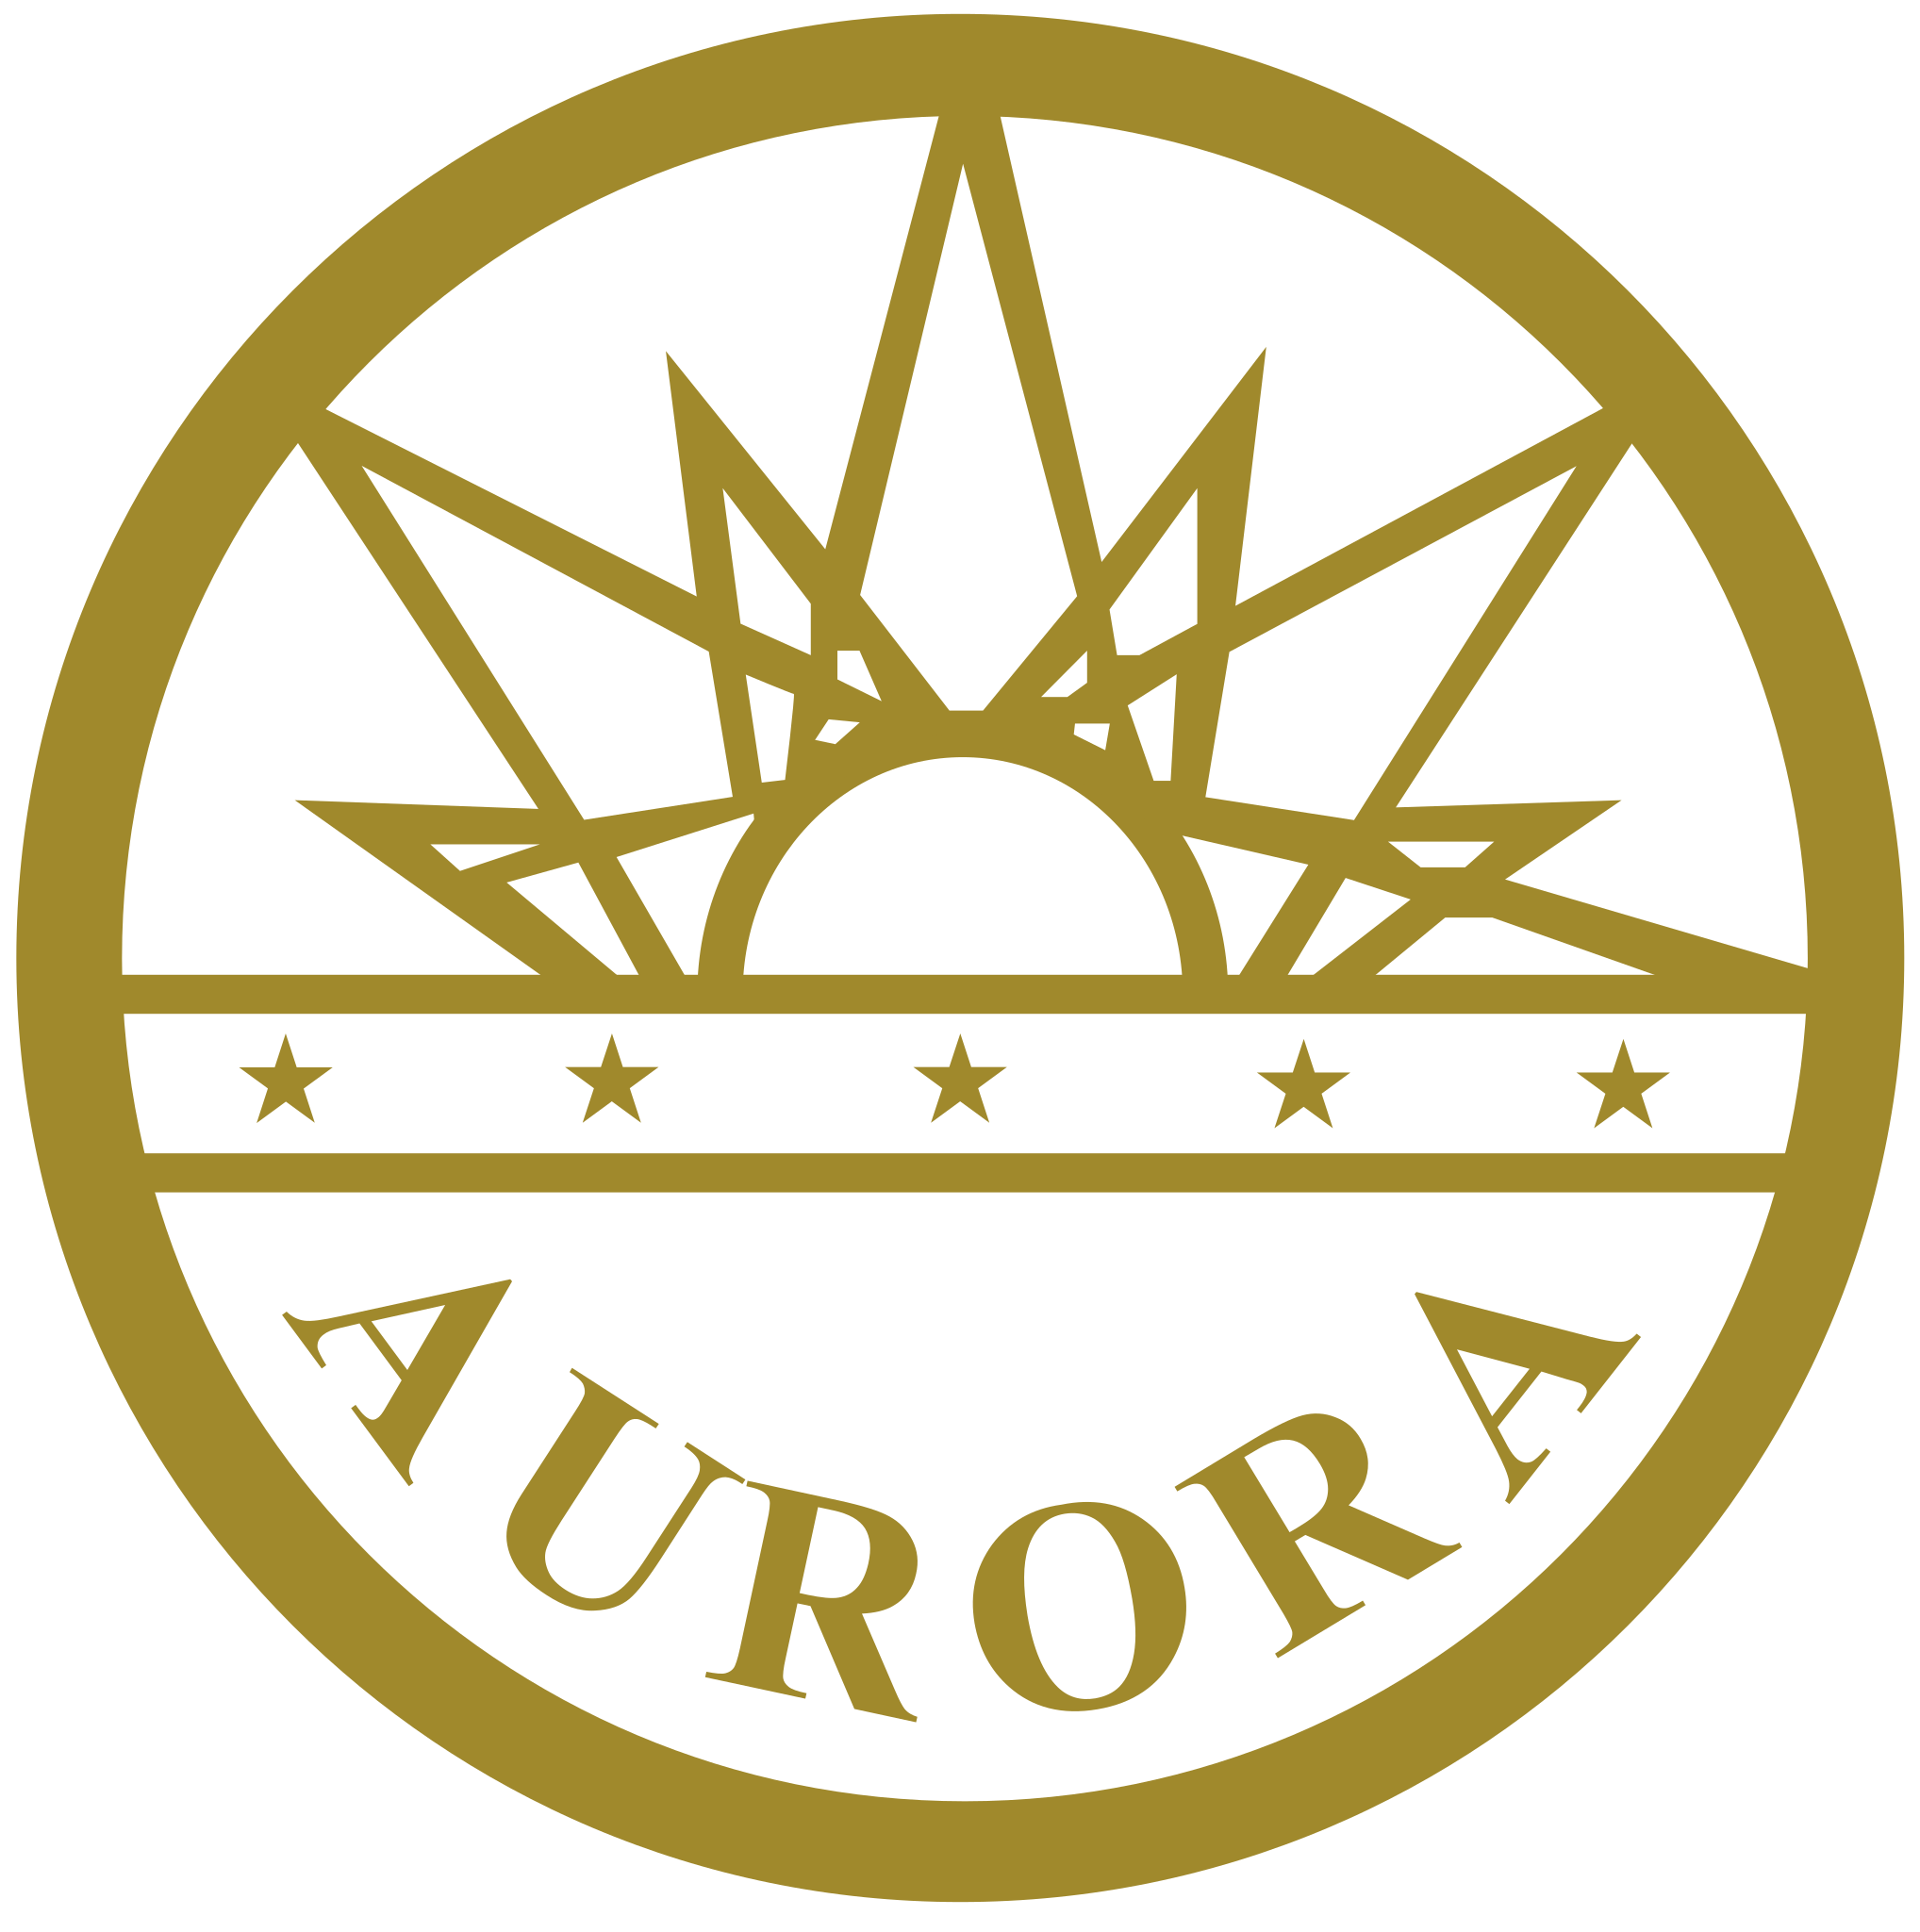 Aurora logo and seal